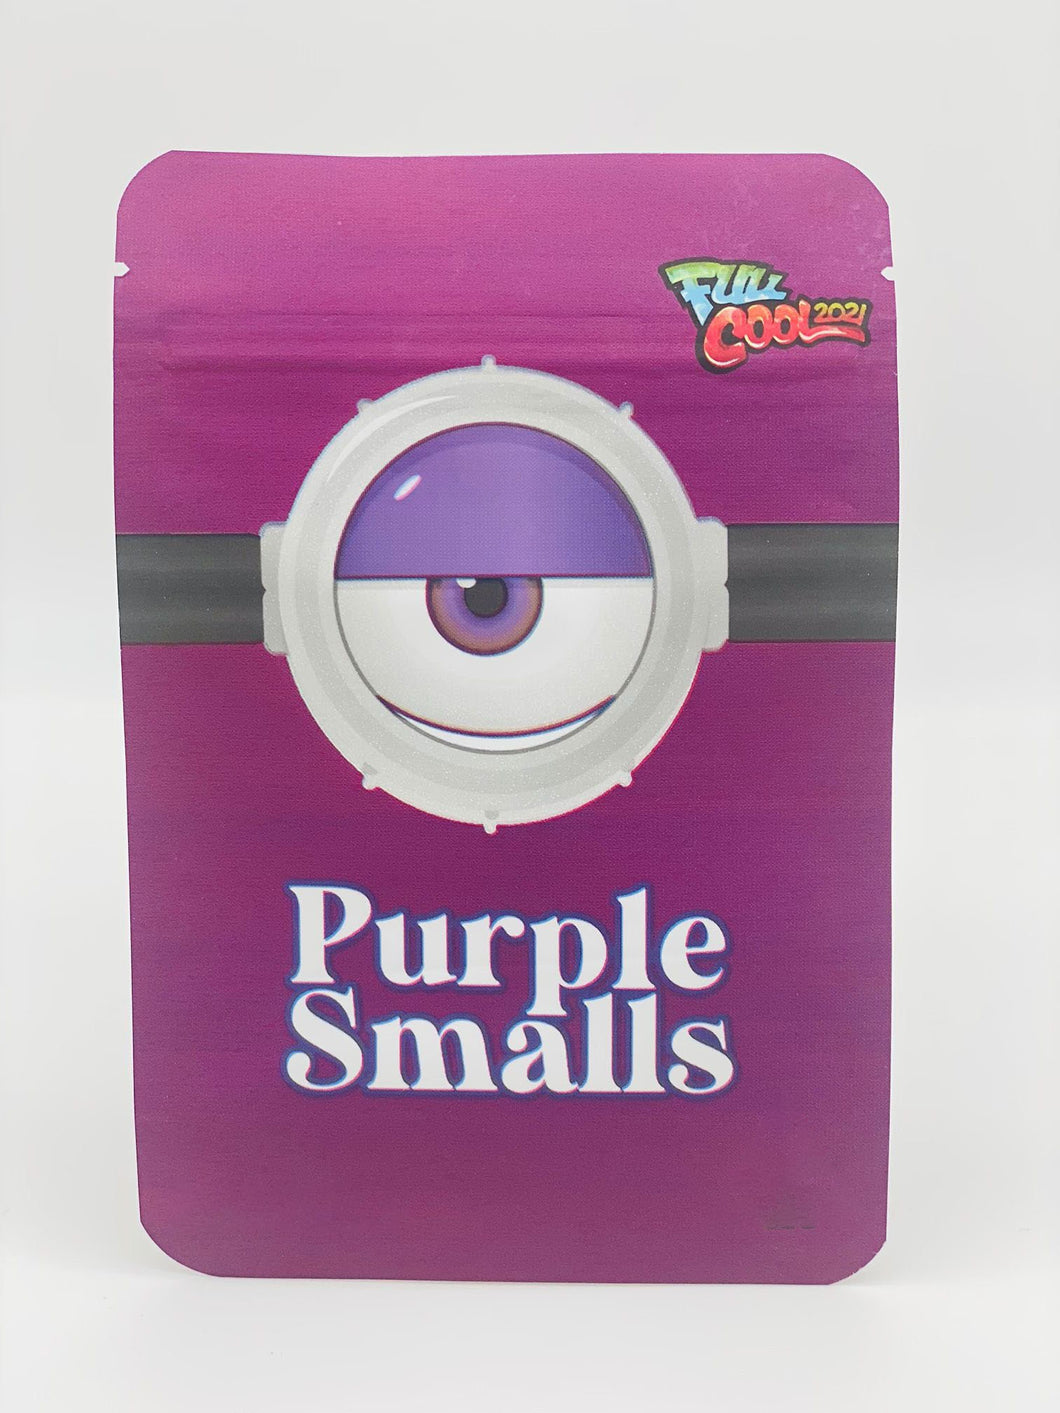 50 Purple Smalls 3.5 gram empty Mylar bags